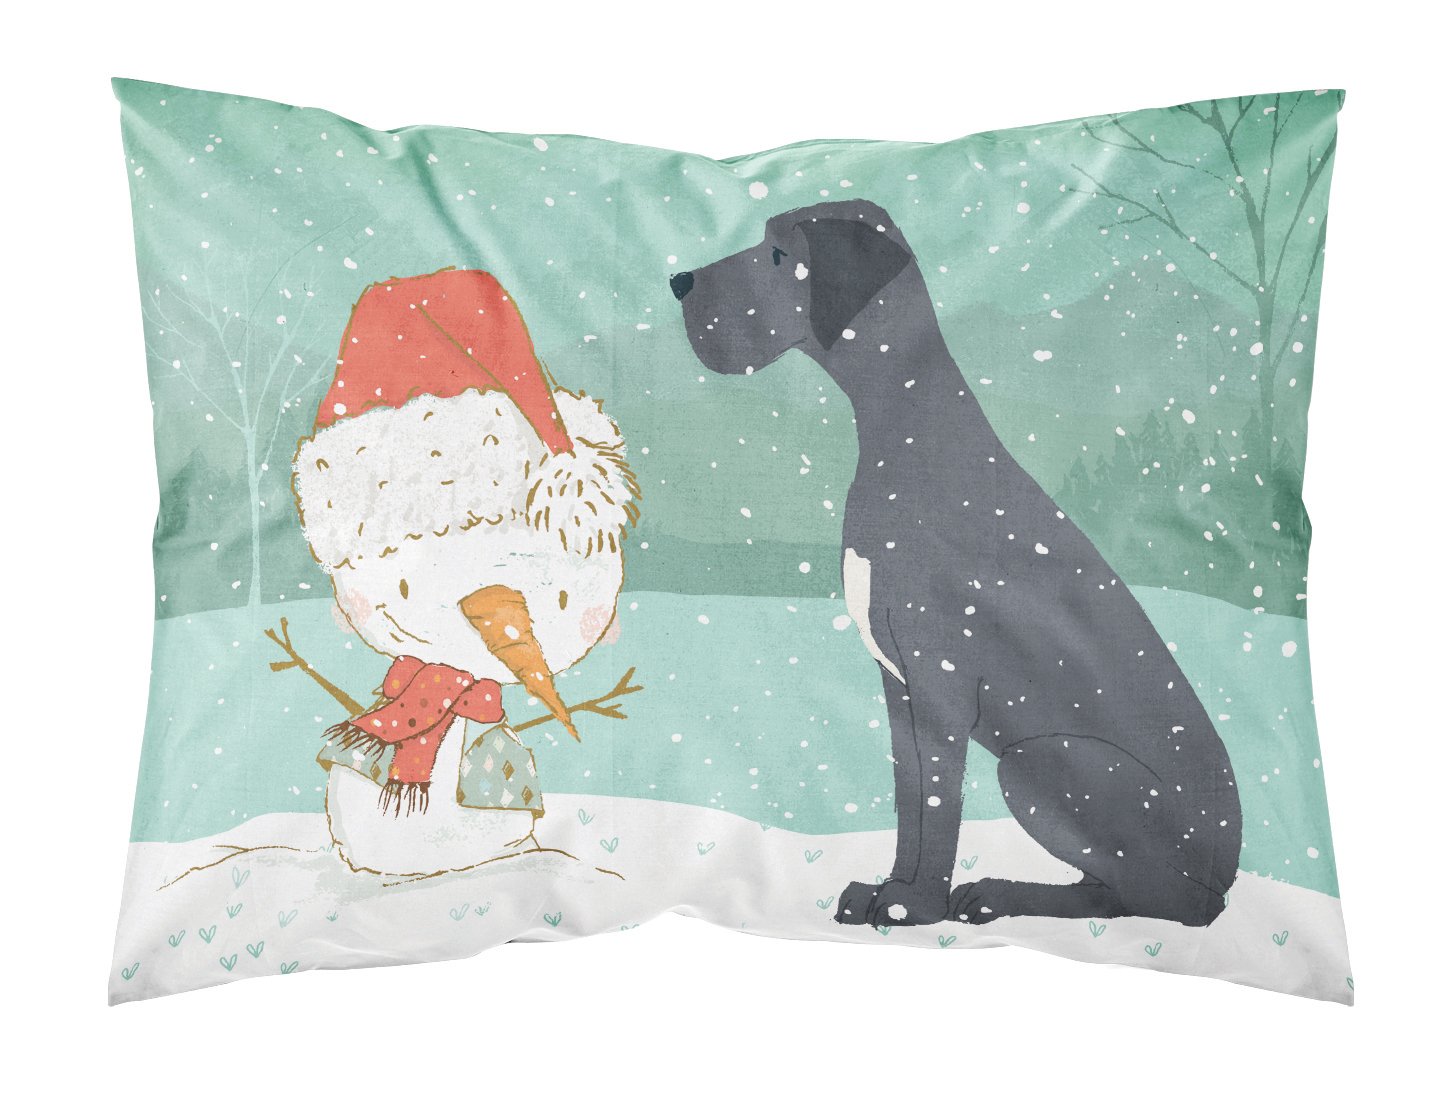 Black Great Dane and Snowman Christmas Fabric Standard Pillowcase CK2039PILLOWCASE by Caroline's Treasures